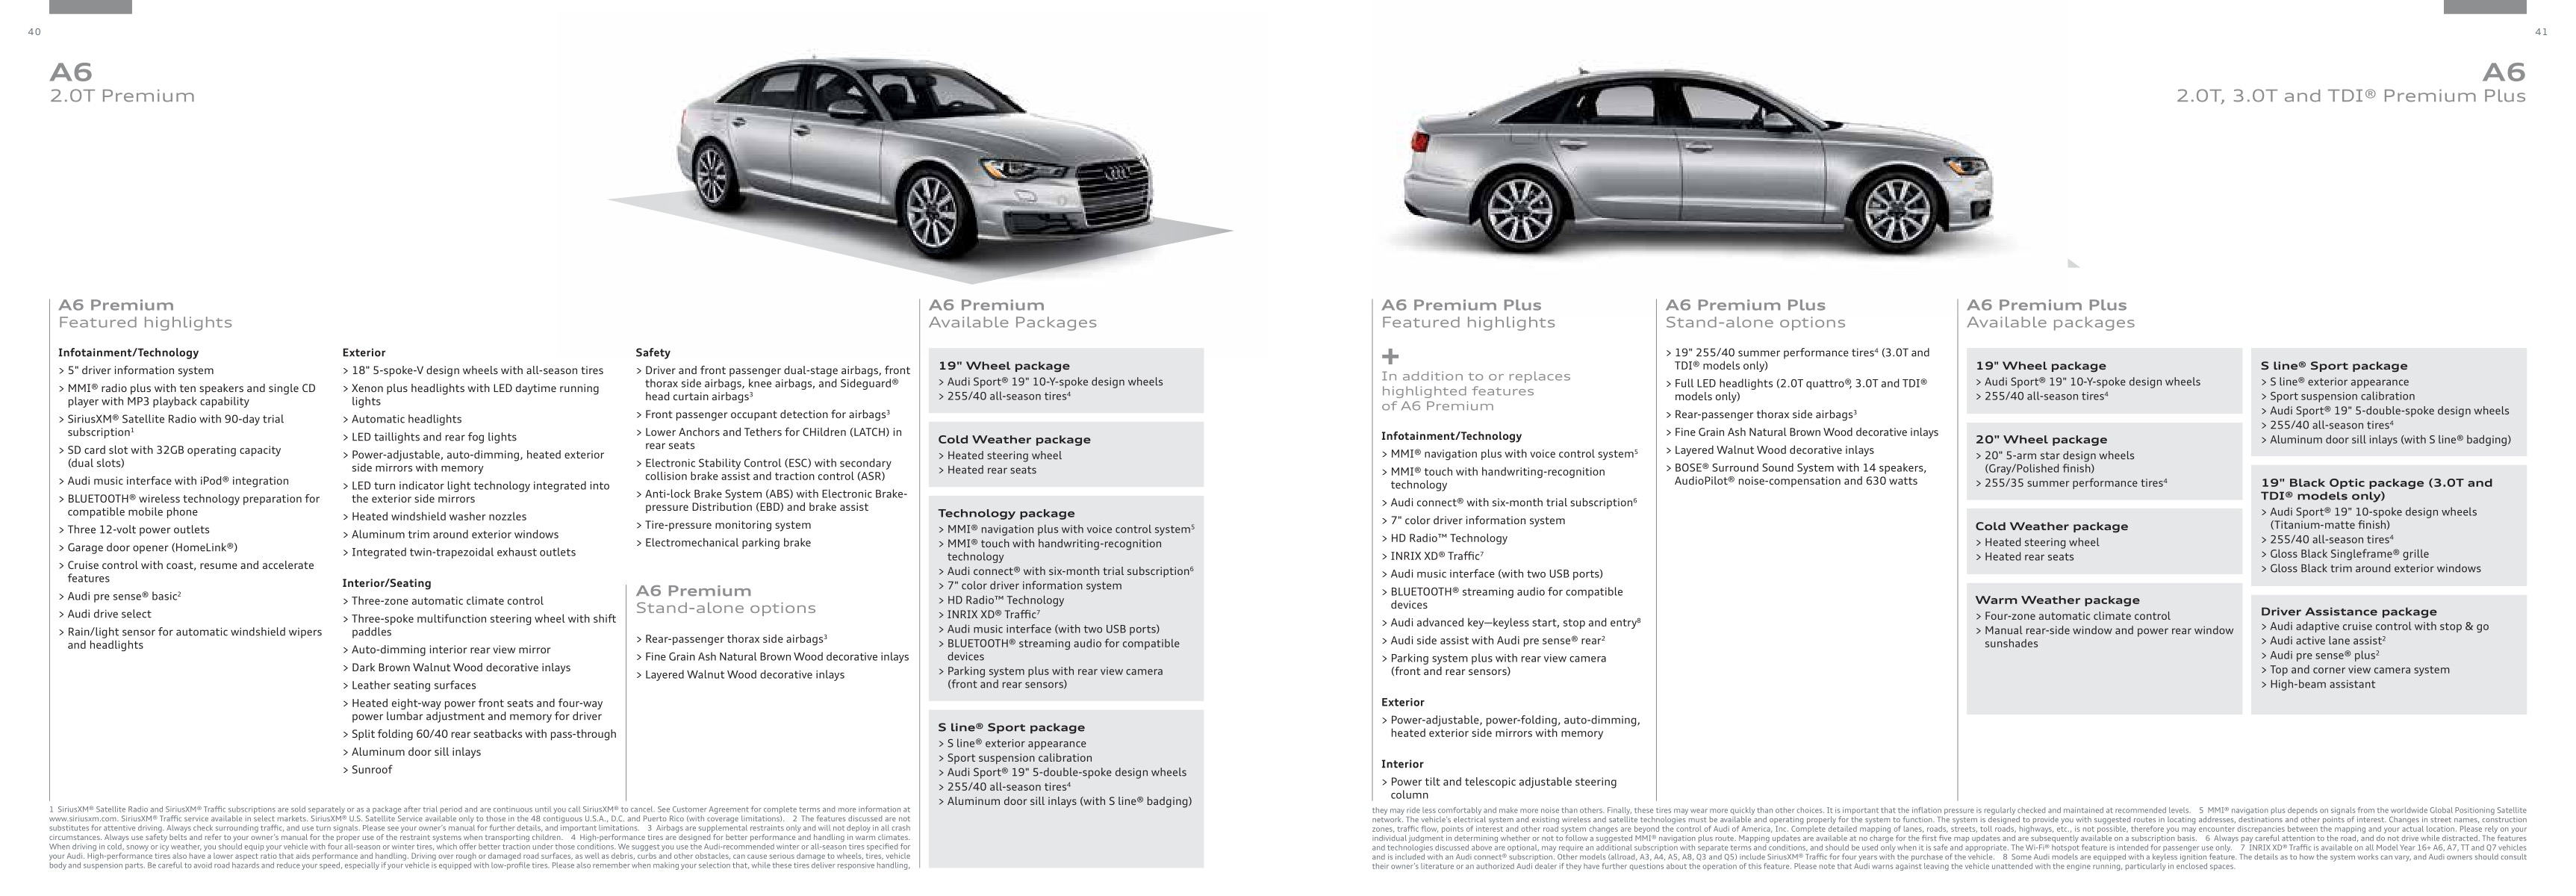 2016 Audi A6 Brochure Page 7